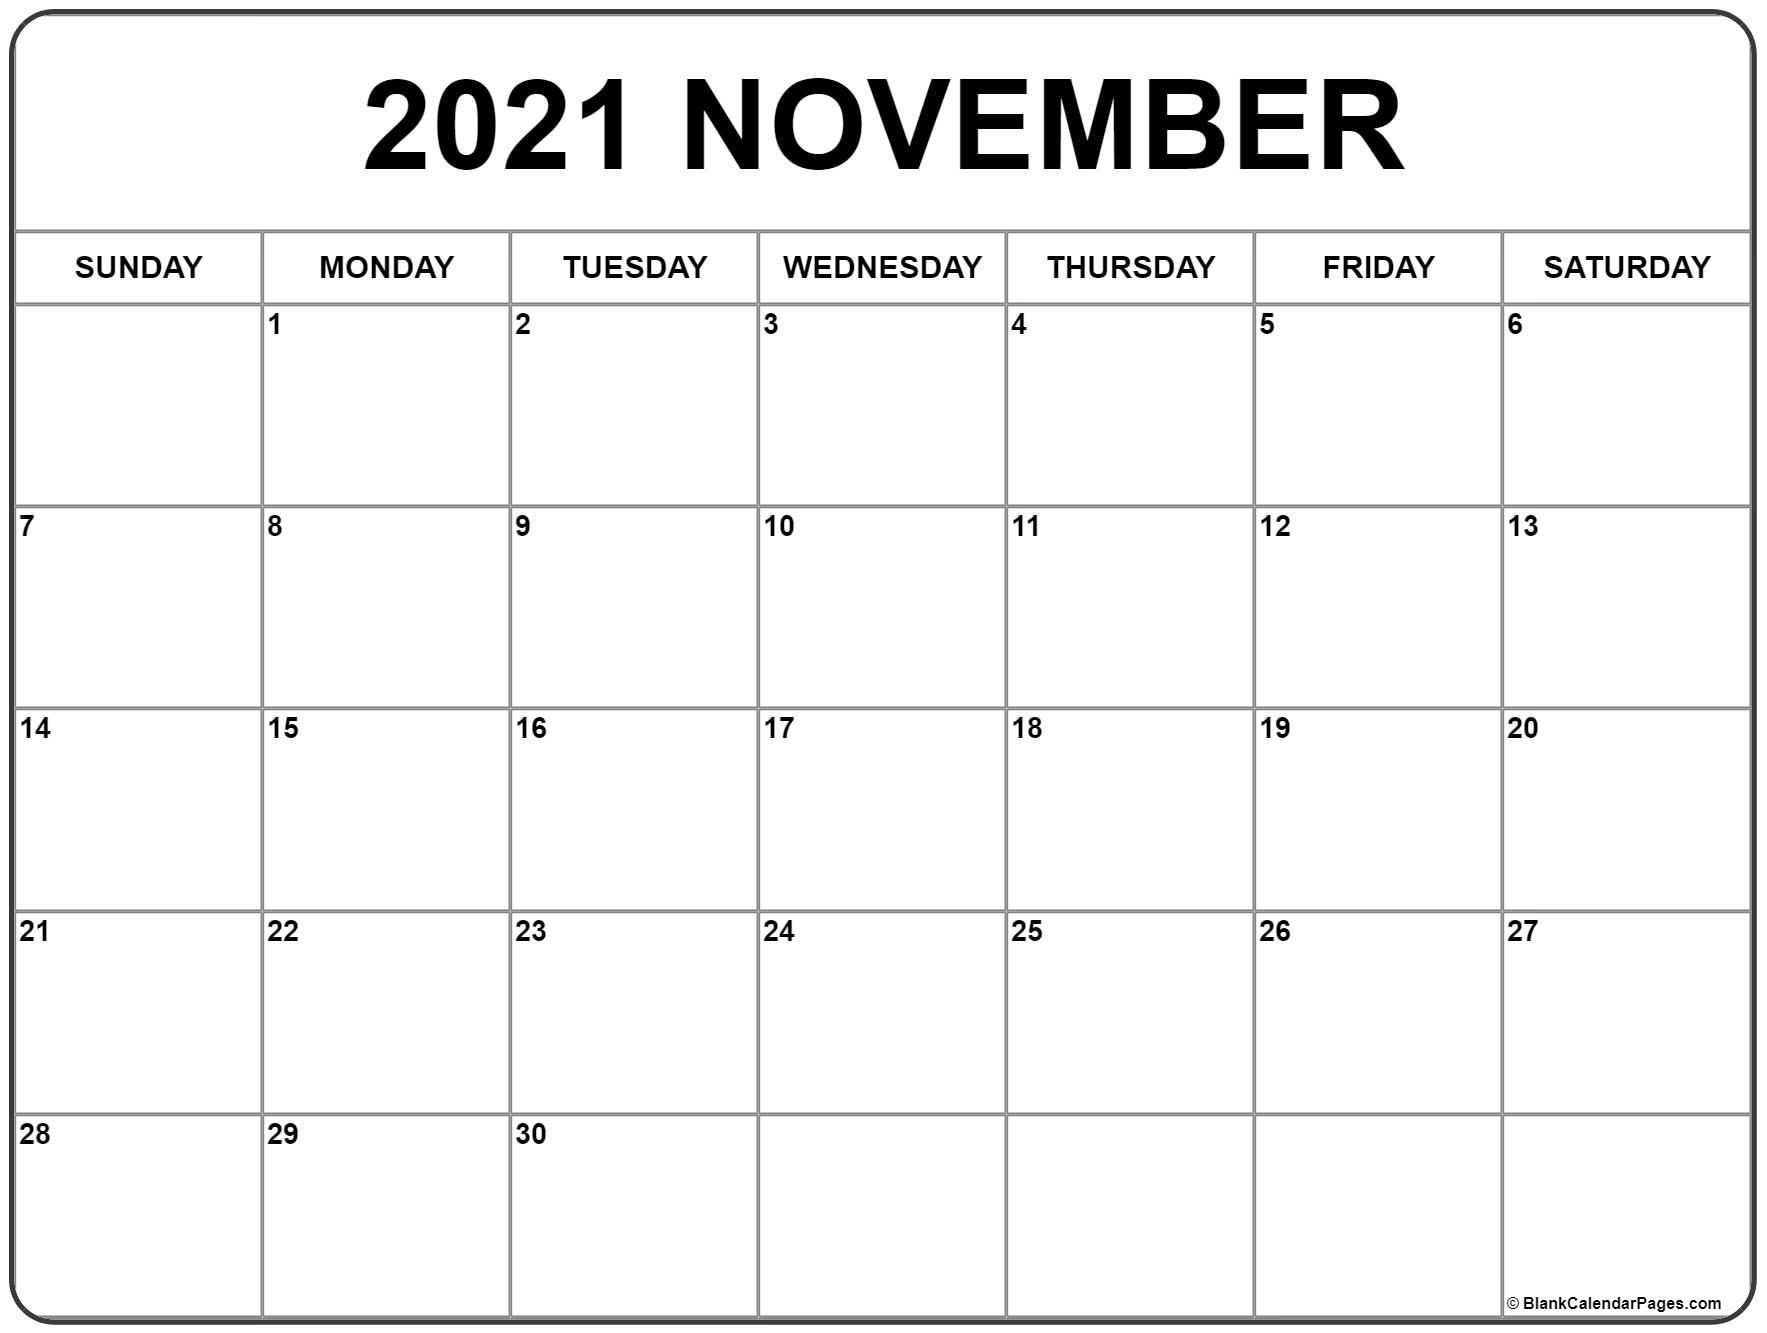 November 2021 calendar